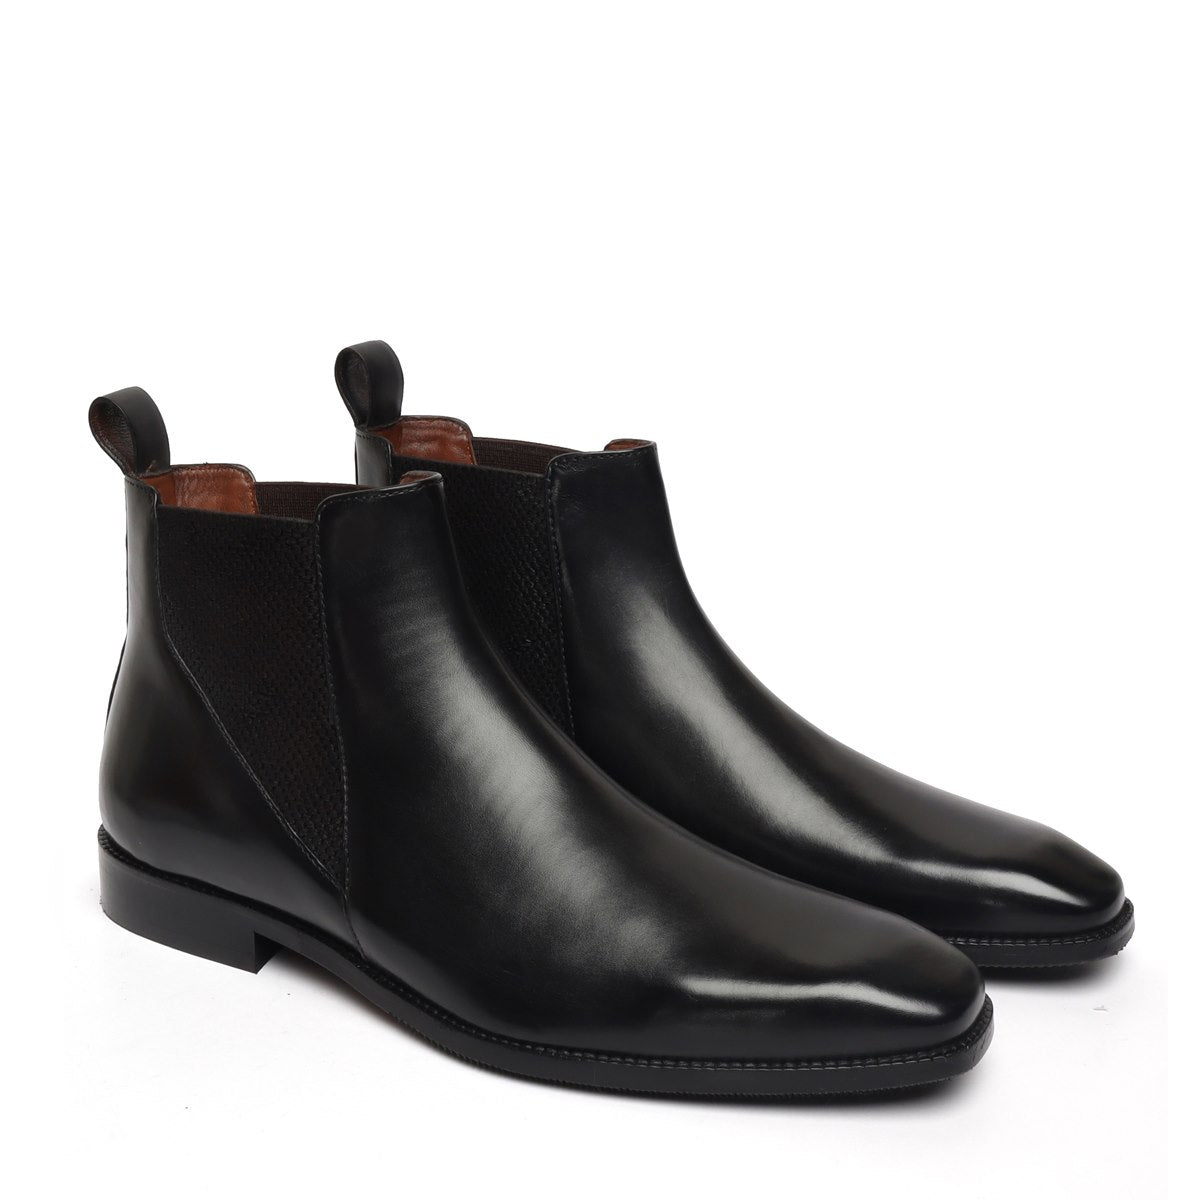 New shape Black Leather Chelsea Boot by Brune & Bareskin with a Stylish Sharp Elastic Design